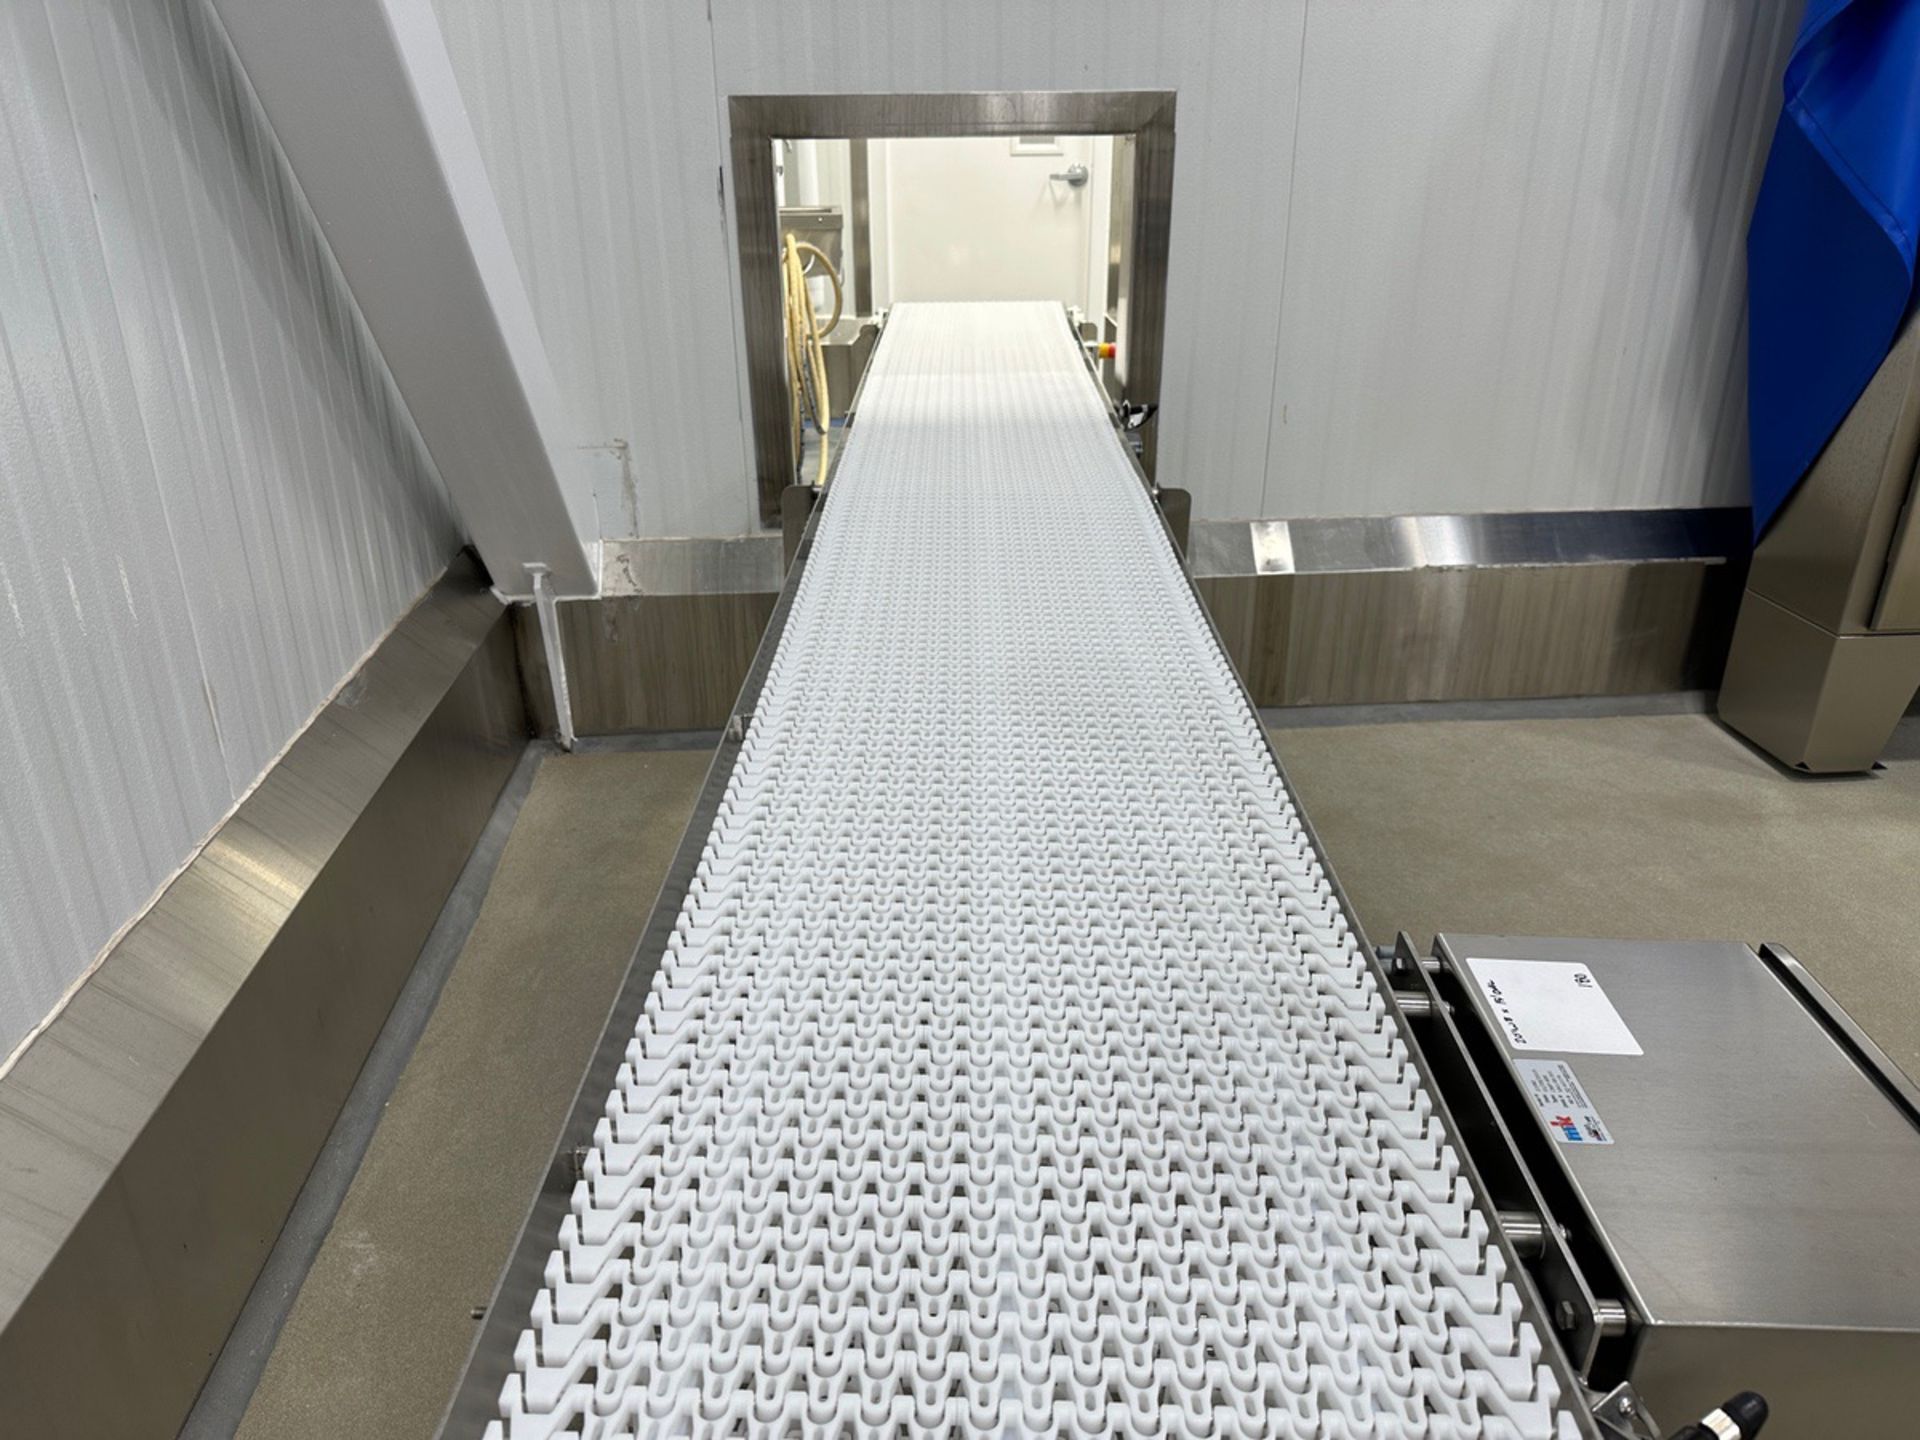 2019 MK Clean Move Stainless Steel Conveyor | Rig Fee $250 - Image 4 of 4